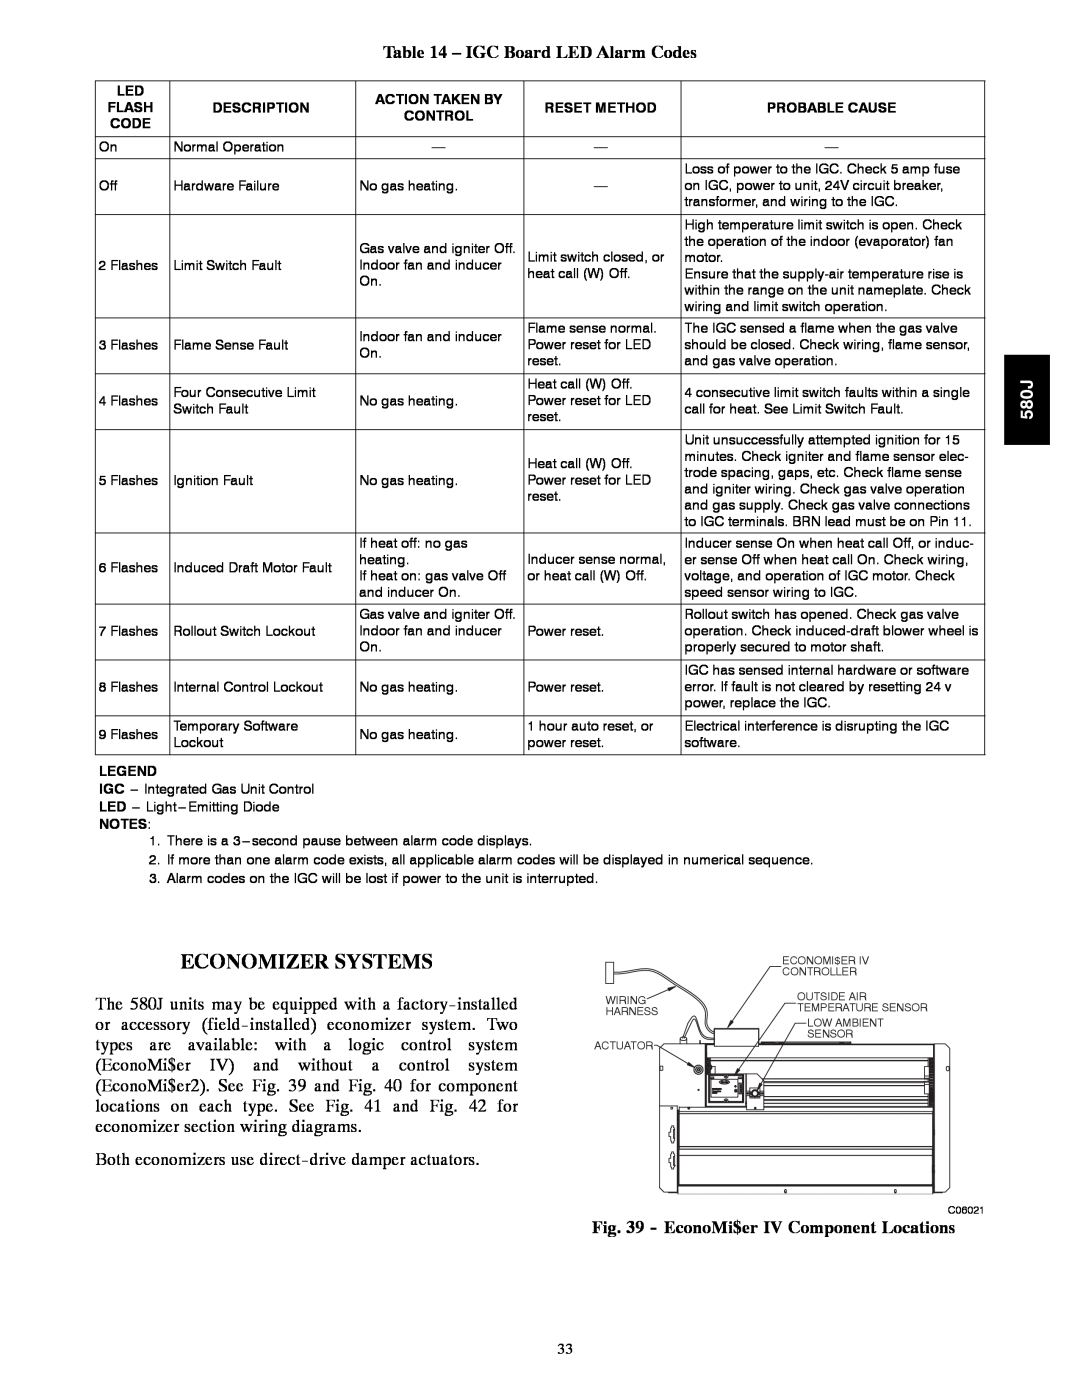 Bryant 580J*04--12 appendix Economizer Systems, IGC Board LED Alarm Codes, EconoMi$er IV Component Locations 